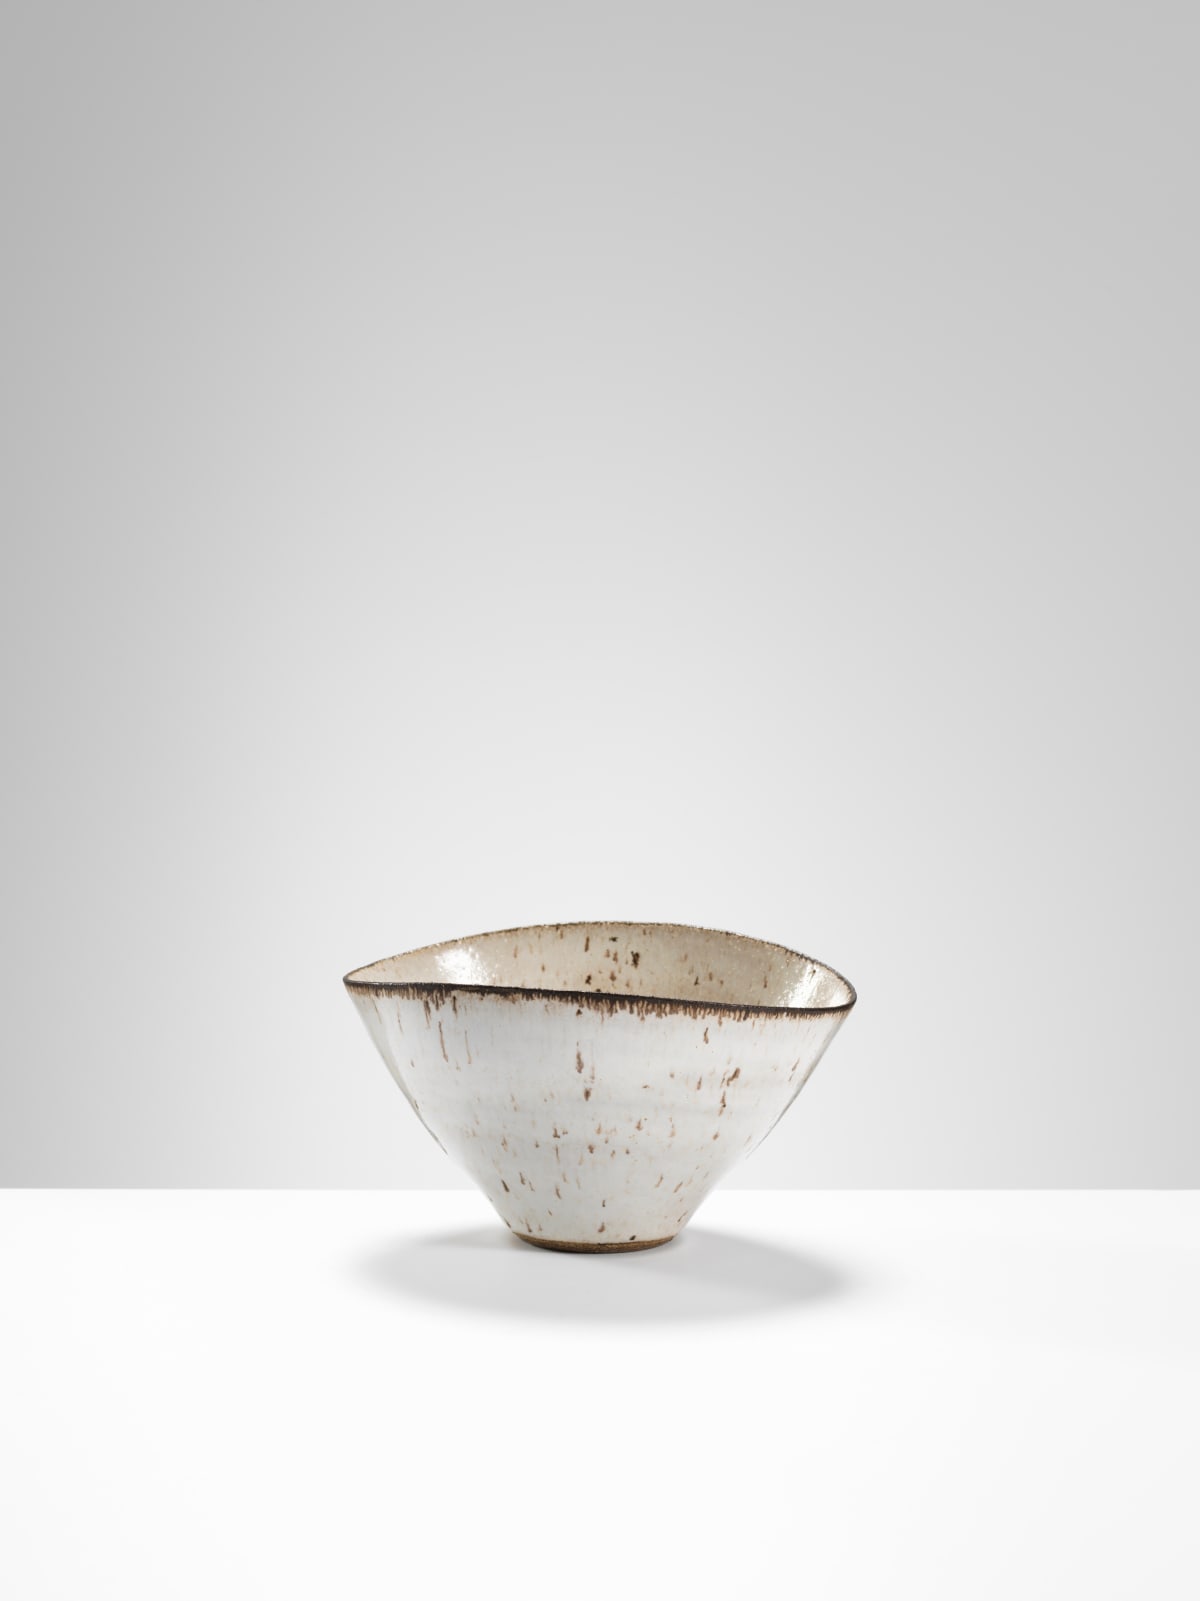 Lucie Rie / 1902–1995 | Oxford Ceramics Gallery